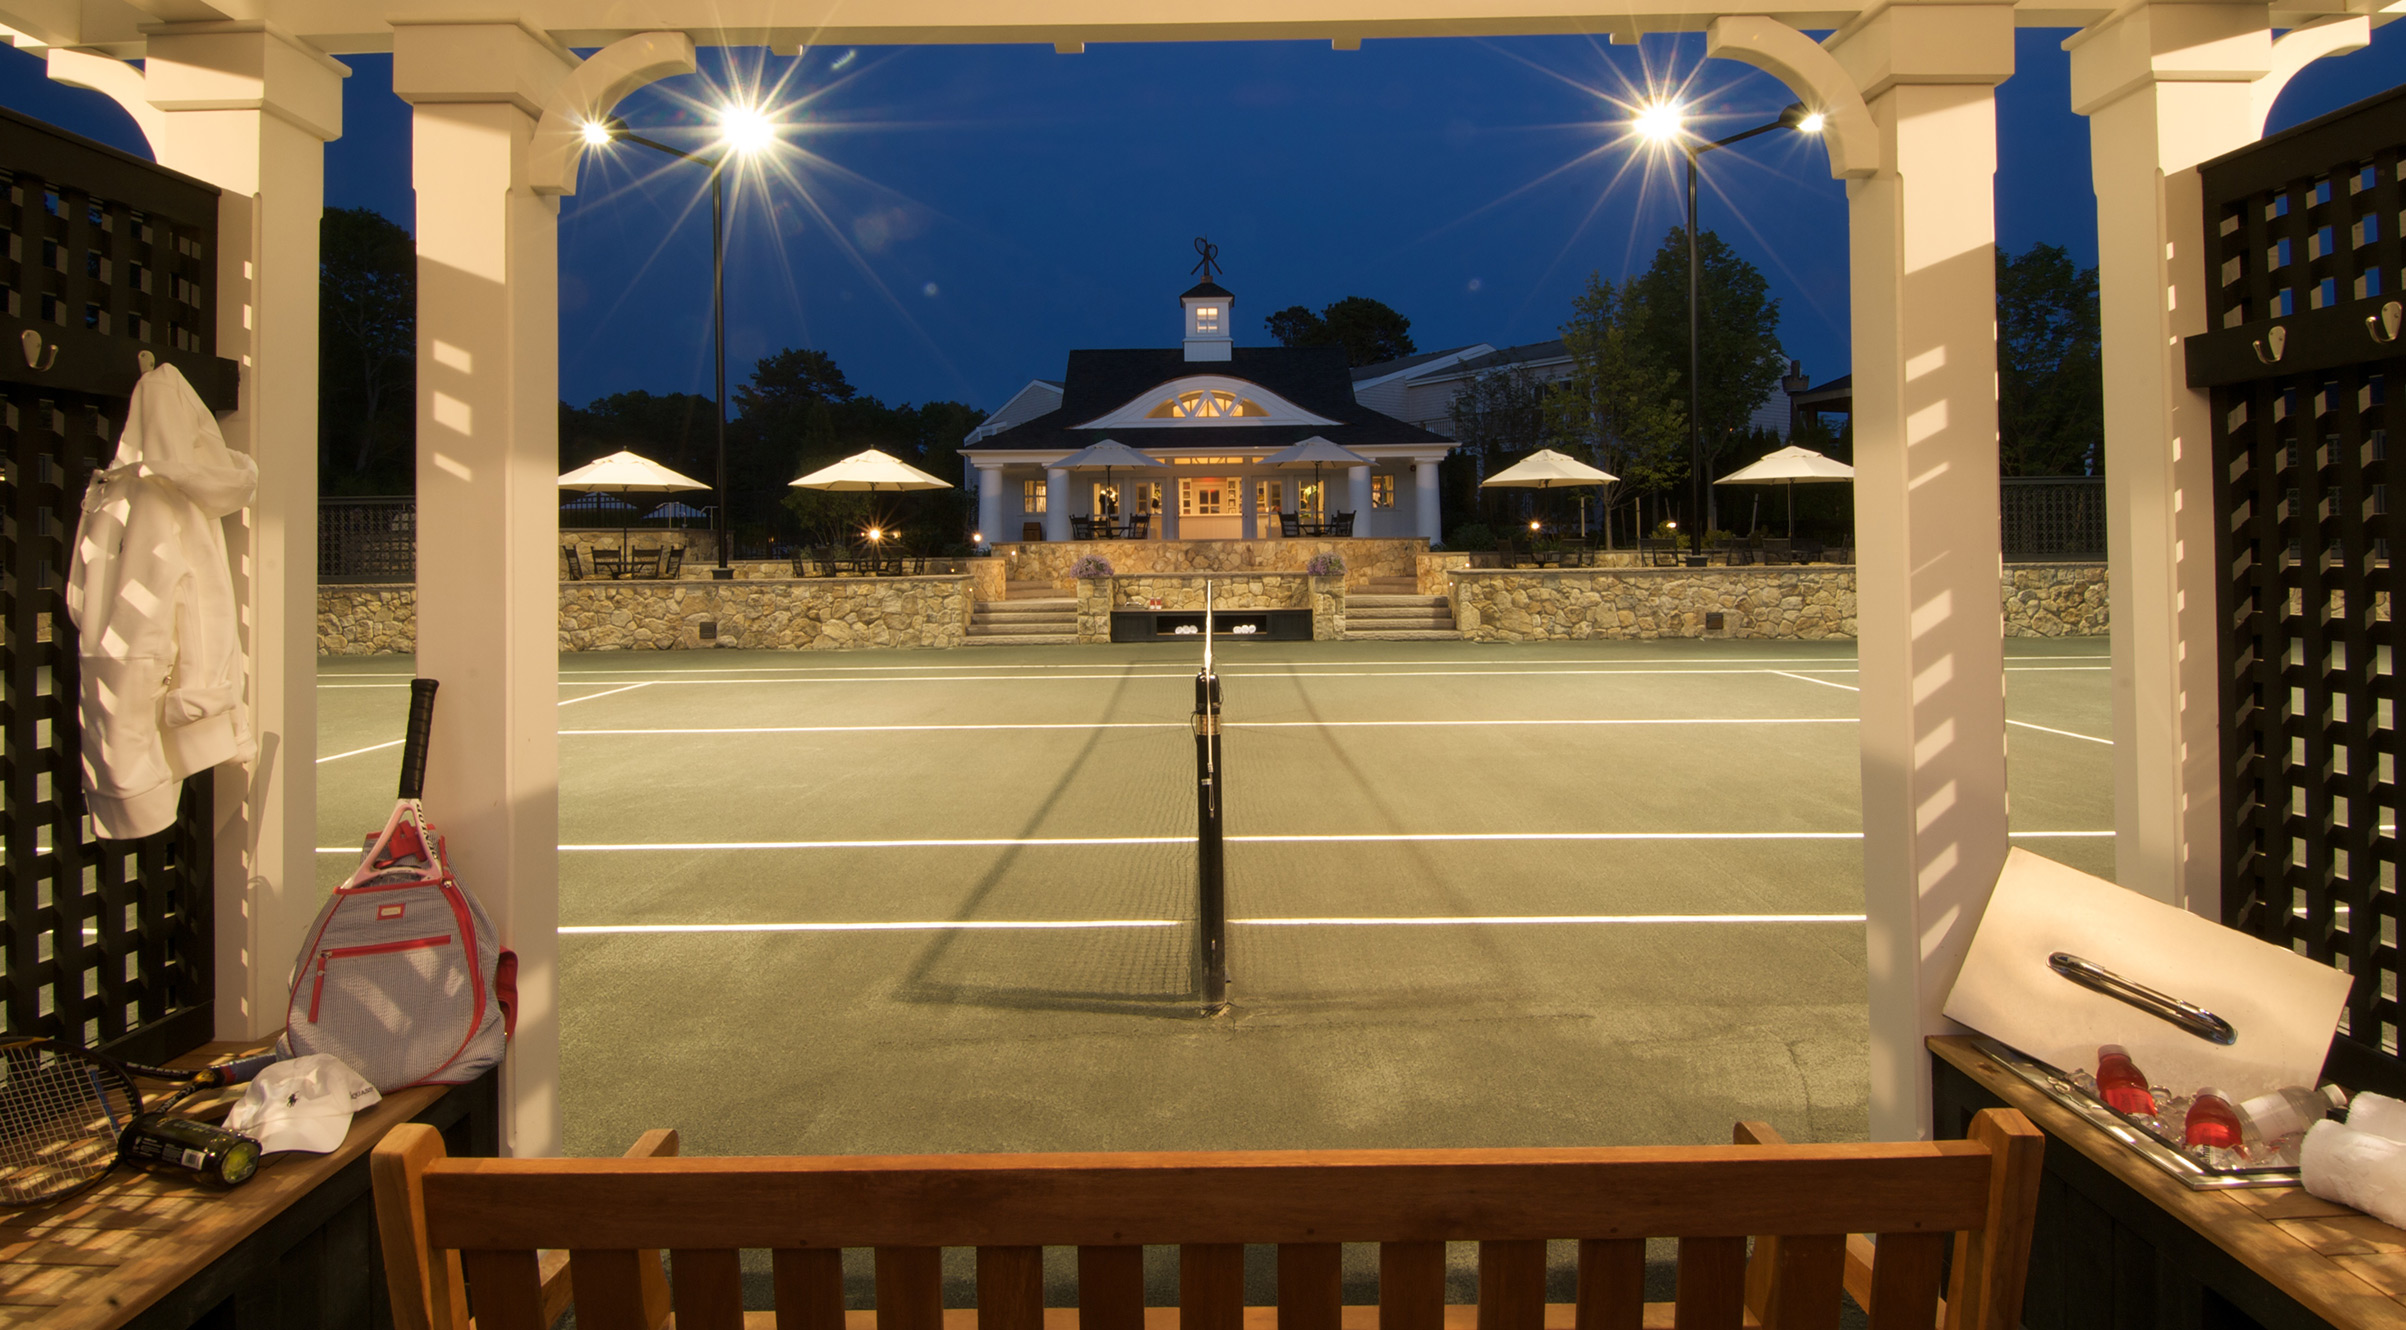 Cape Cod resort tennis courts at night